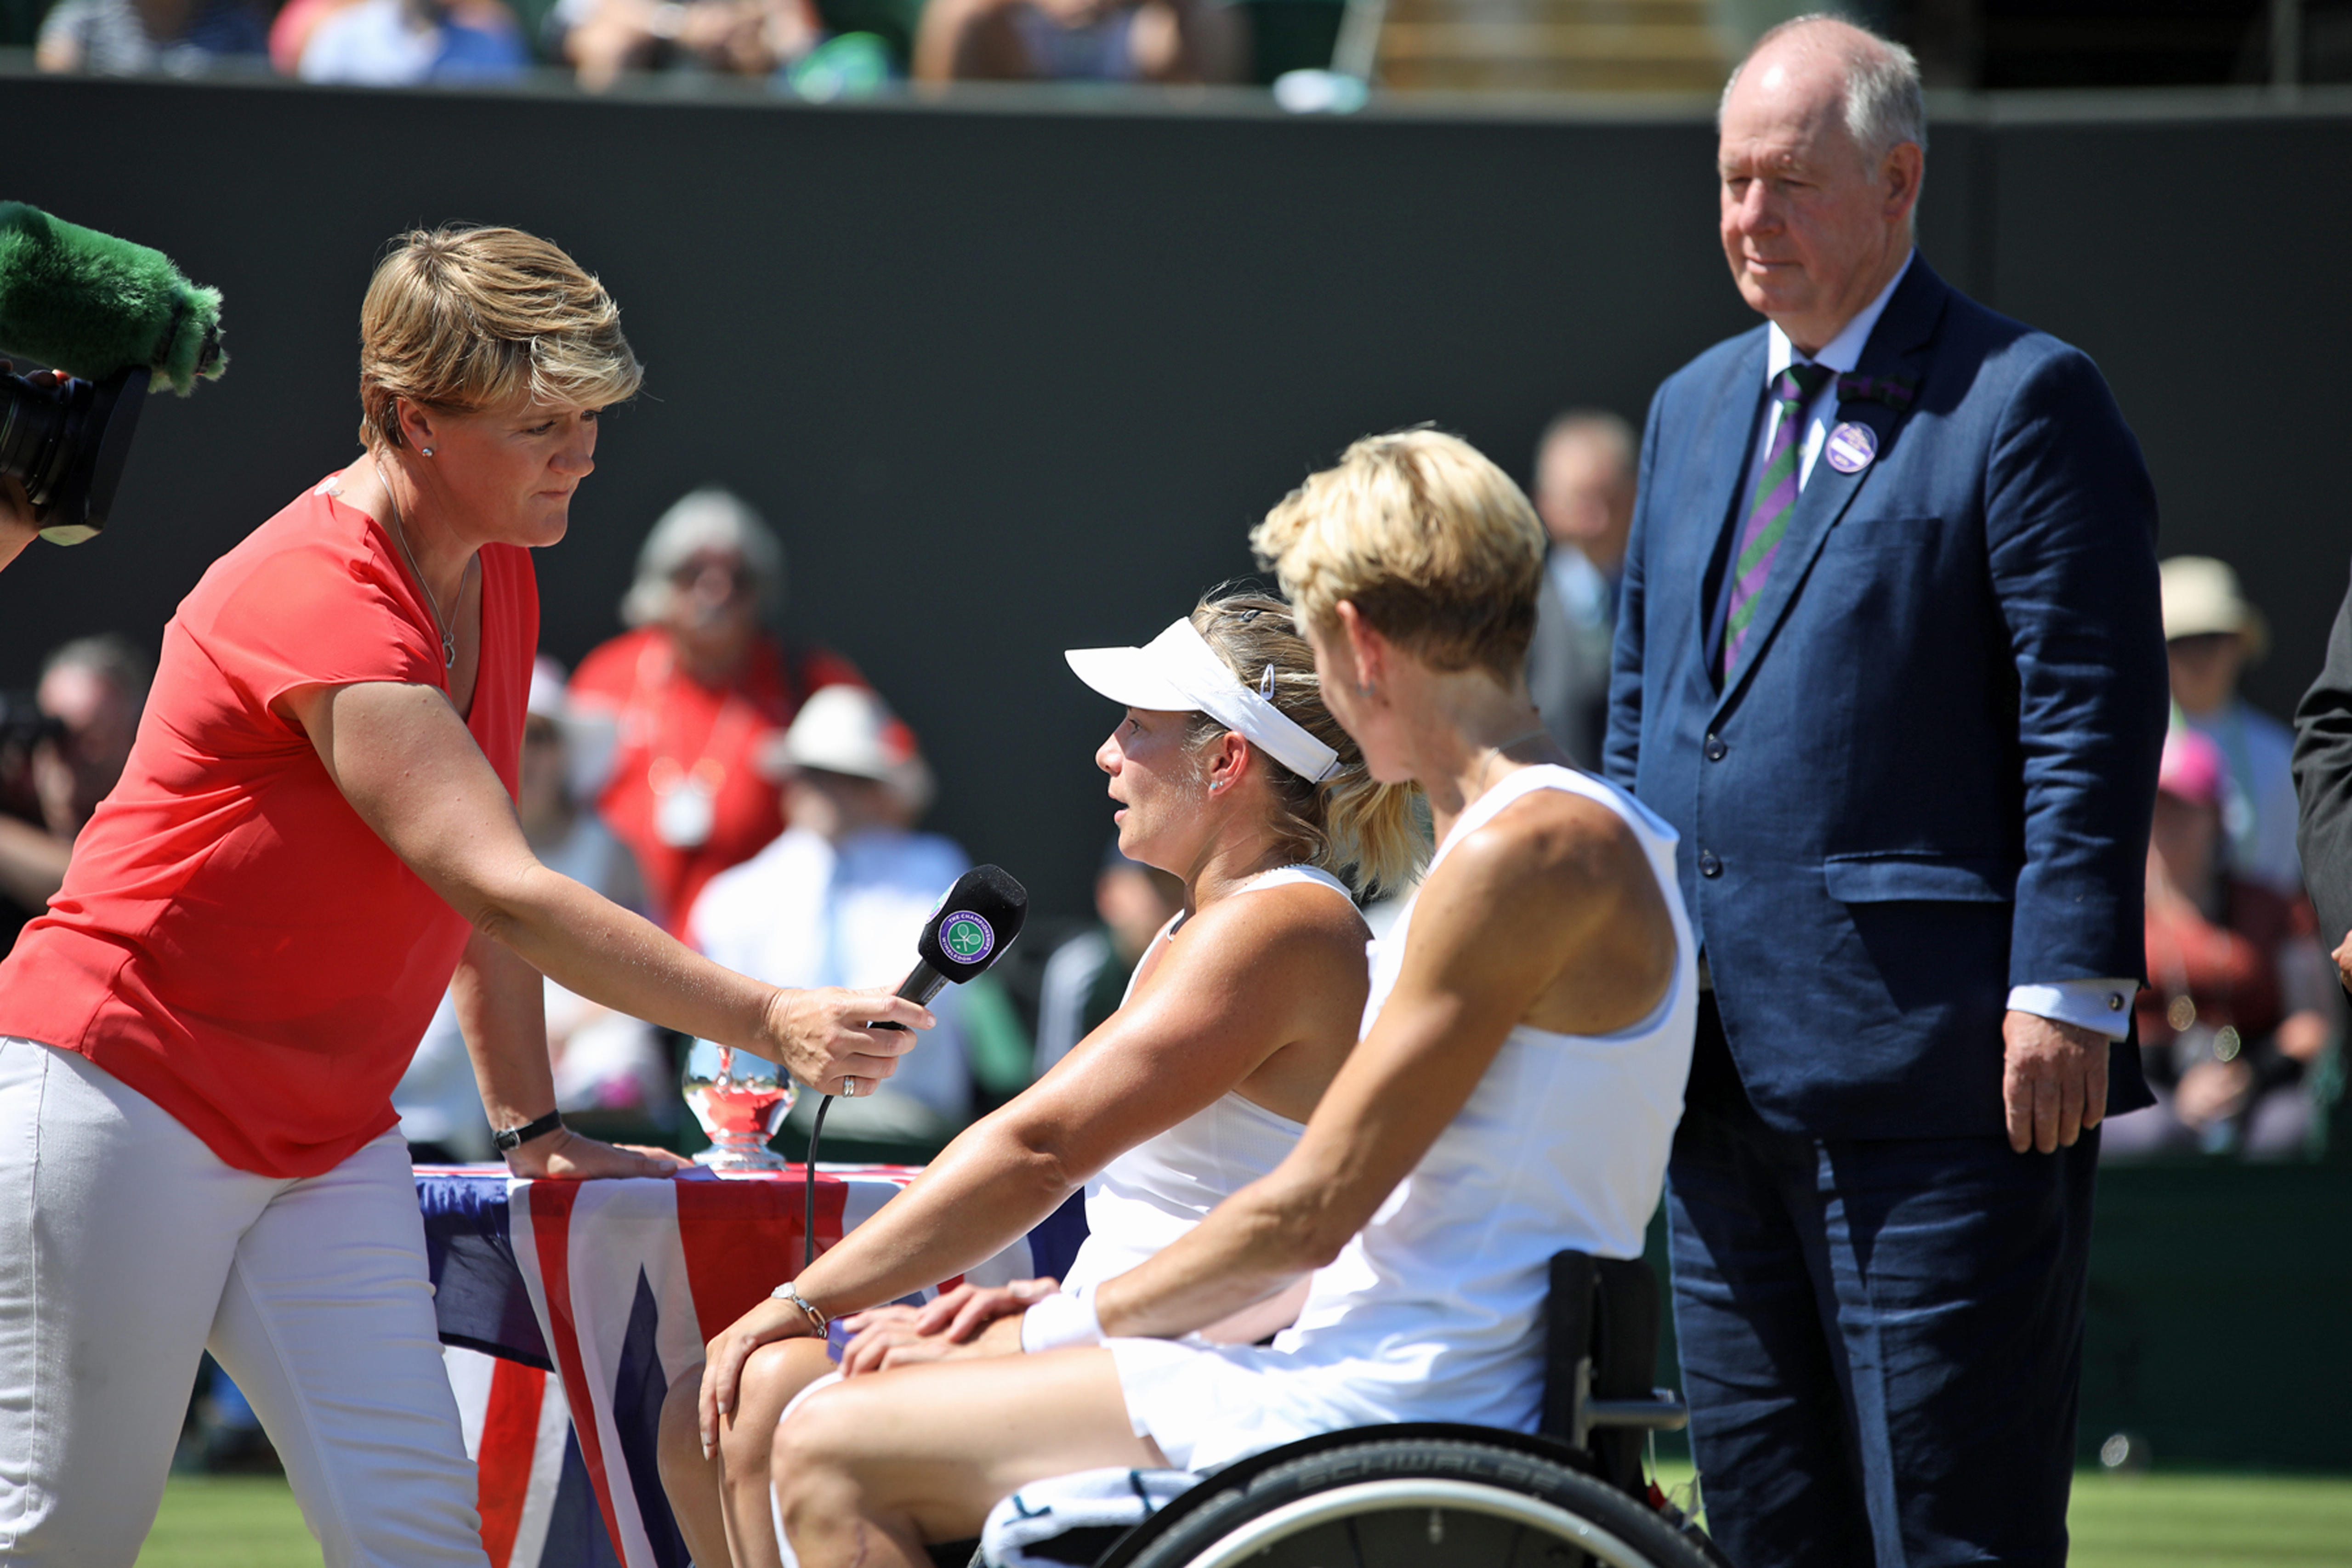 Clare Balding interviewing wheelchair athletes at Wimbledon 2018